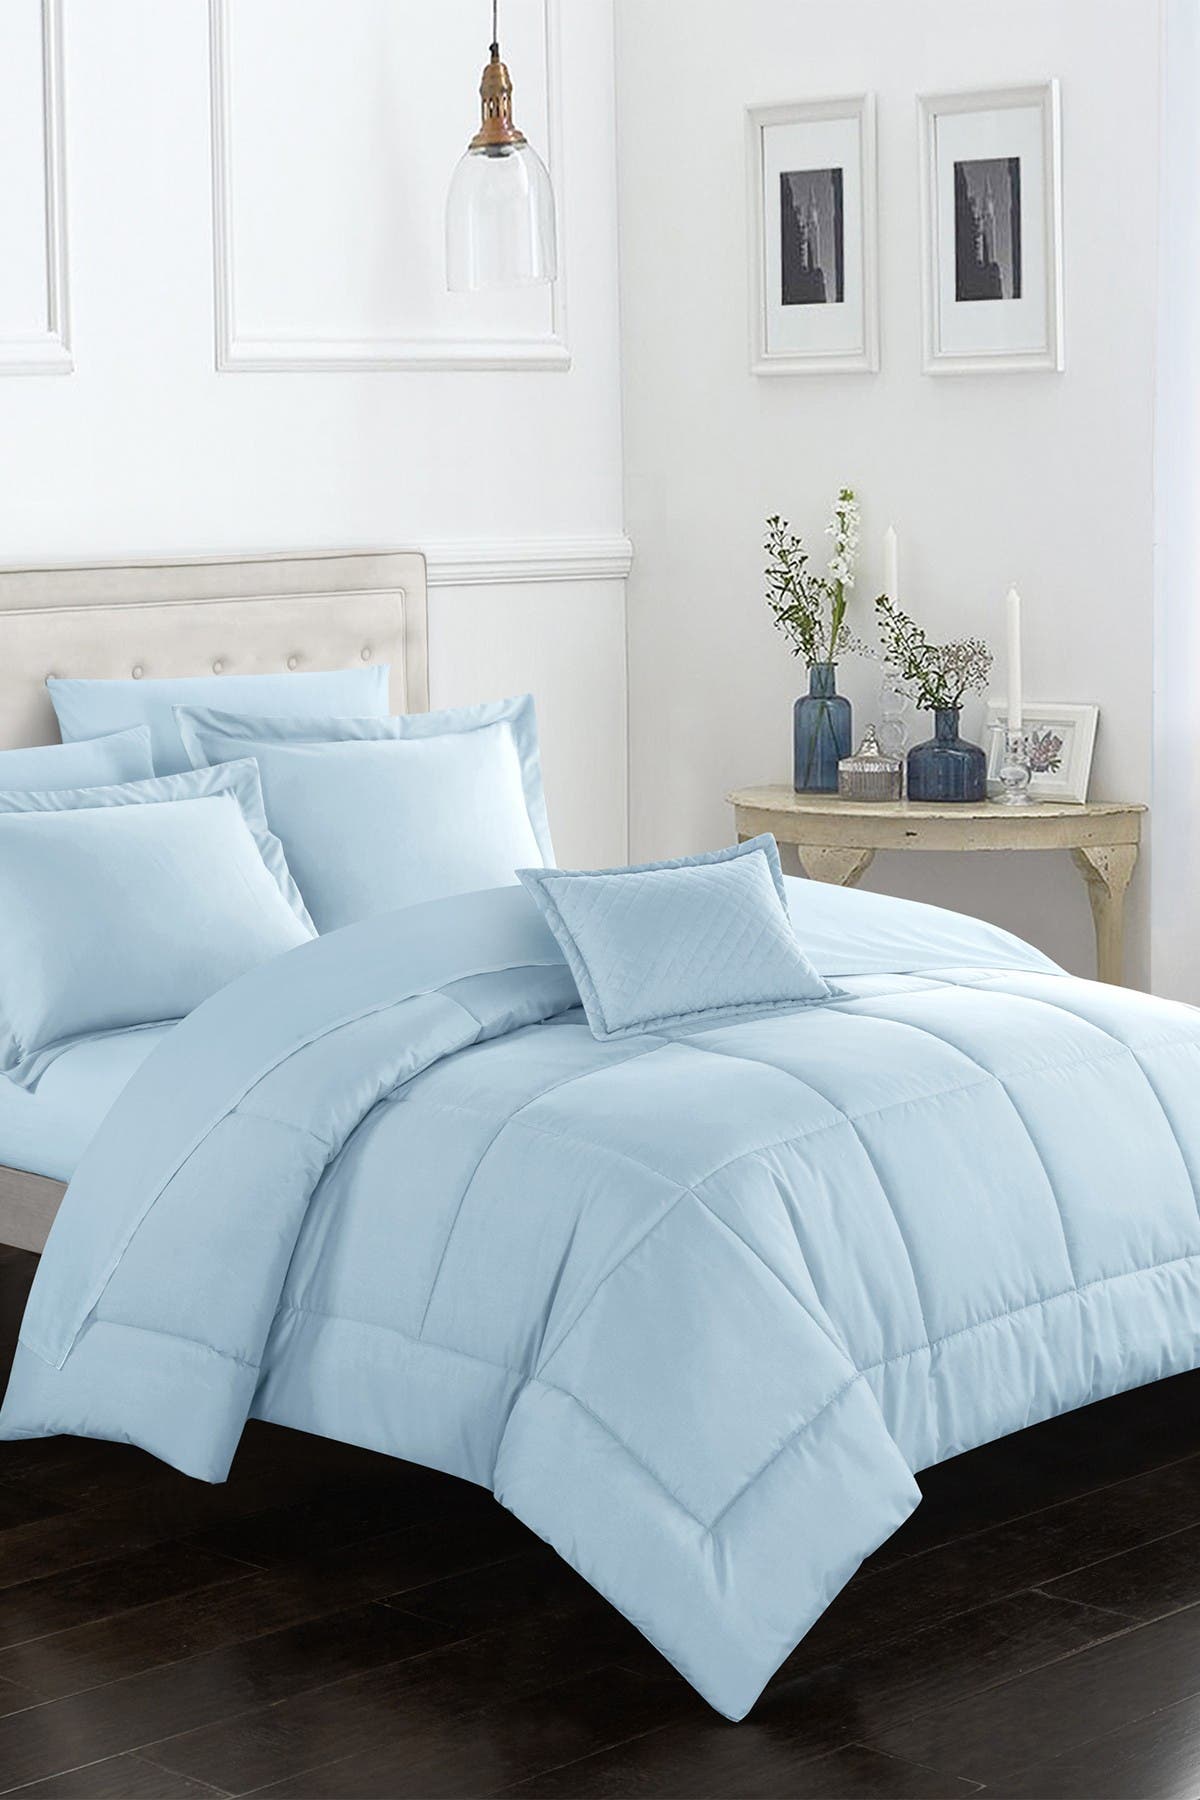 Chic Home Bedding Joshuah Stitched Solid Color Design Bed In A Bag Twin Comforter Set Blue Nordstrom Rack